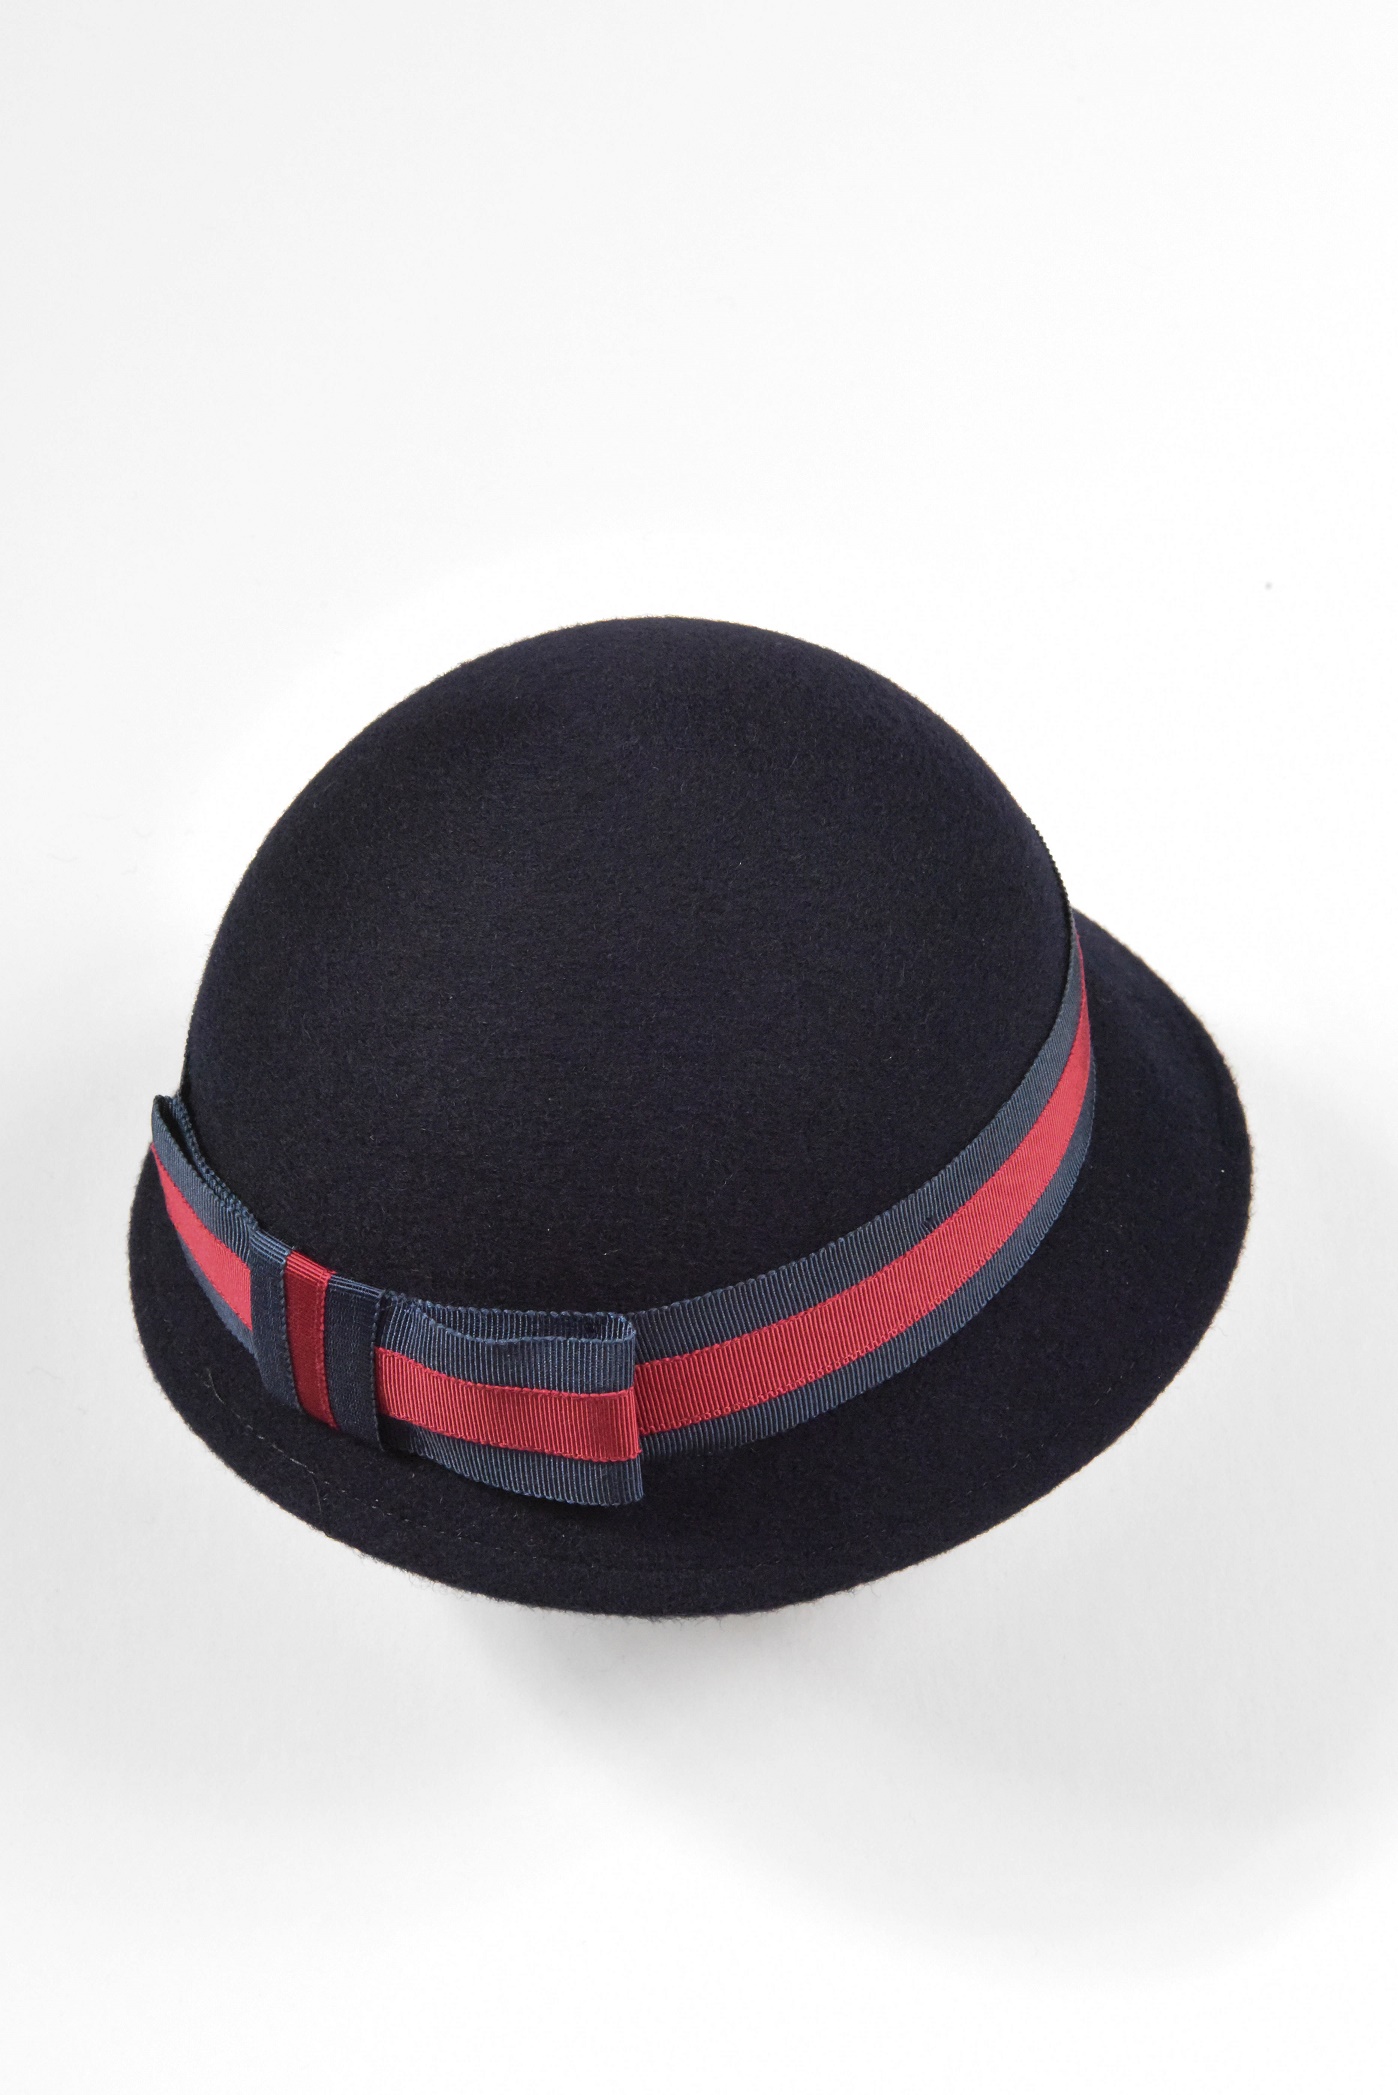 St John's Girls Navy Felt Hat with Ribbon - 51cm